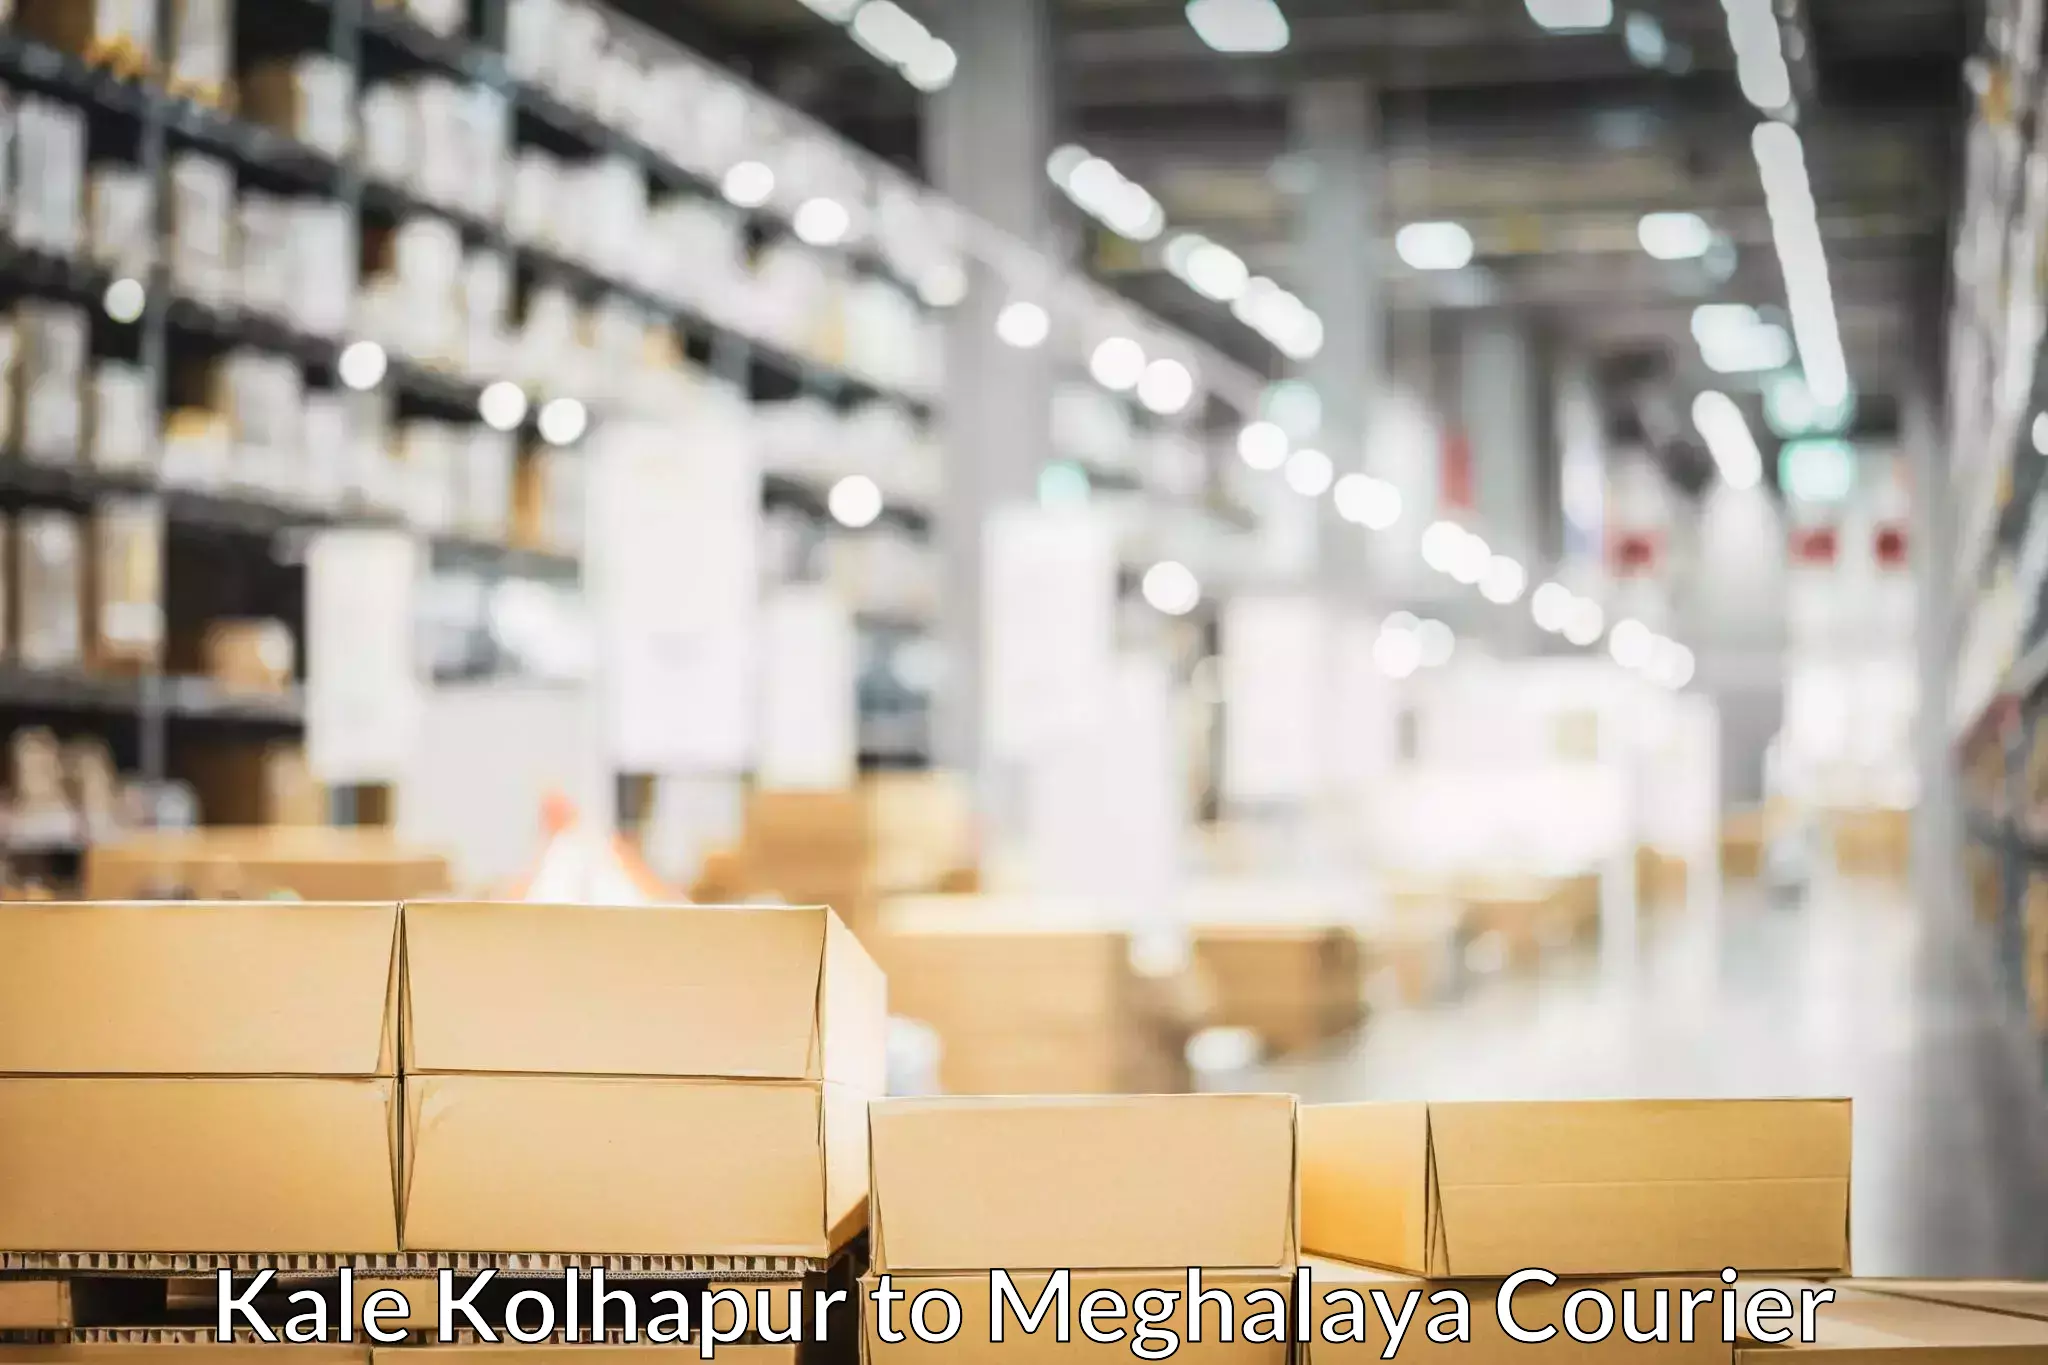 Expert moving and storage Kale Kolhapur to Shillong